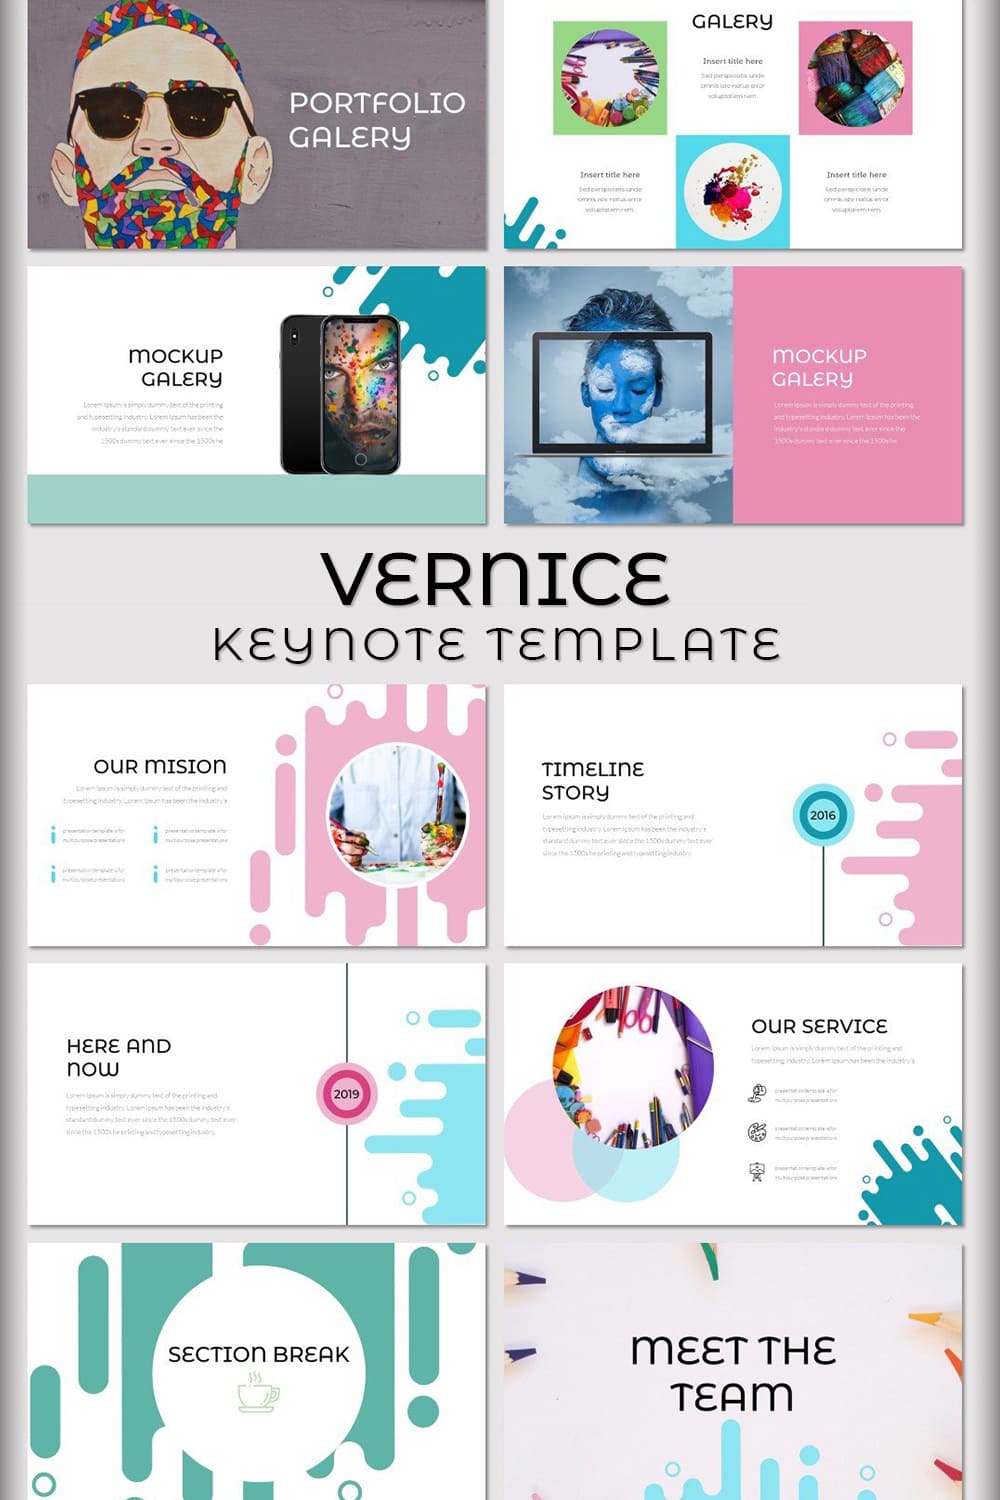 Vernice - Keynote Template Pinterest.